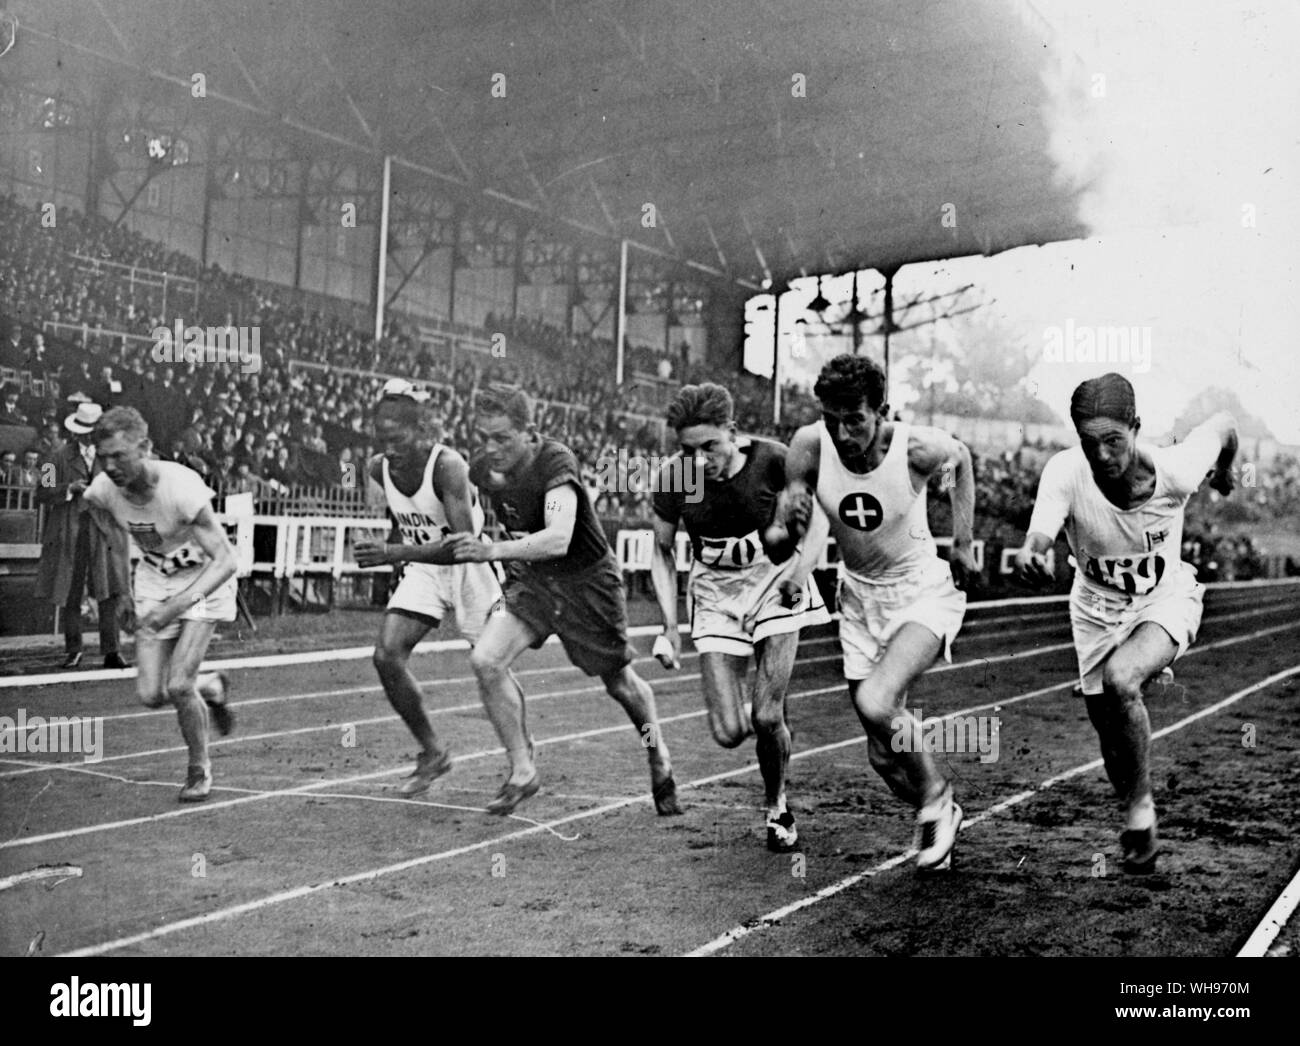 France, Paris Olympics, 1924: Men's 1500 metres race. Stock Photo